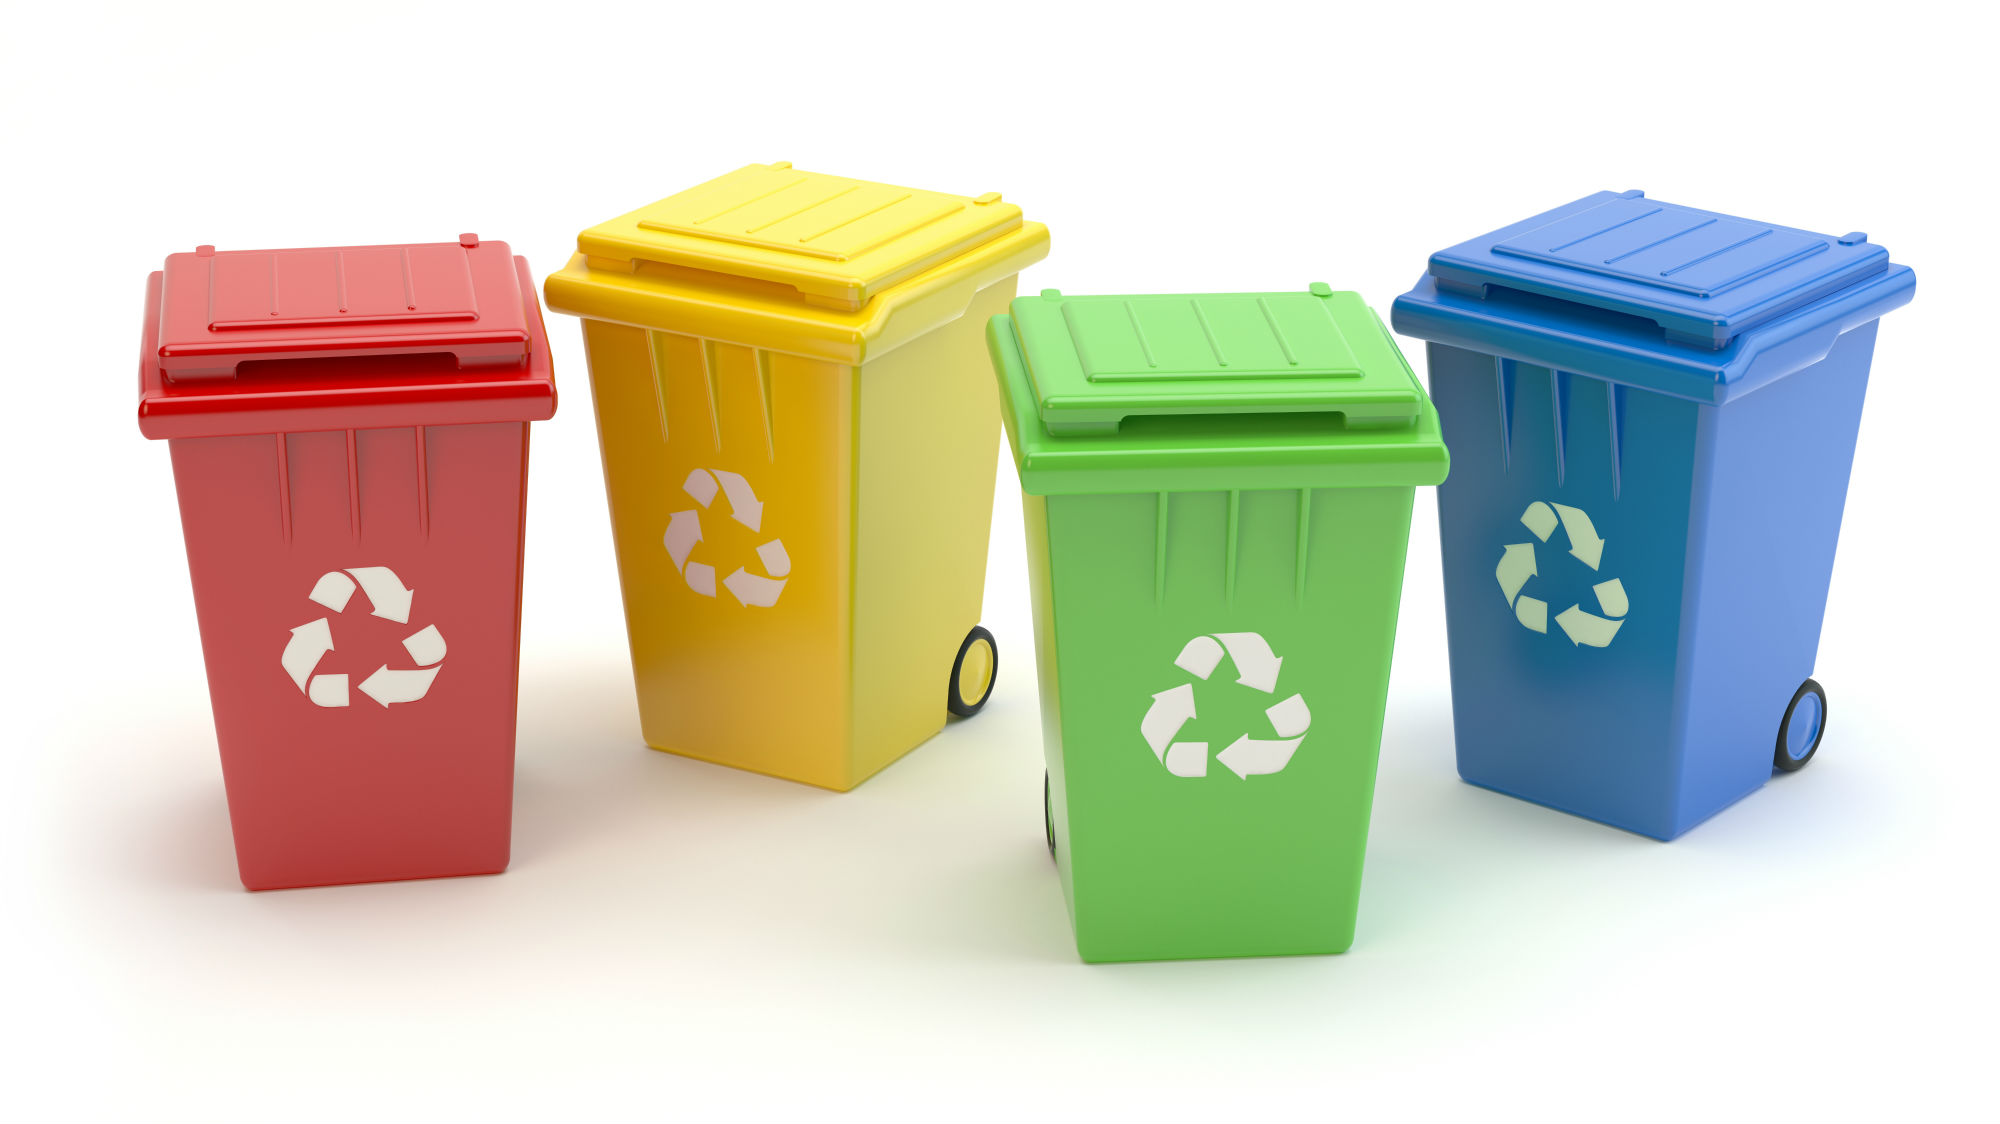 Afgeschaft verlangen Bouwen op Simpel afval scheiden met kleuren voor afvalscheiding | Blog Manutan